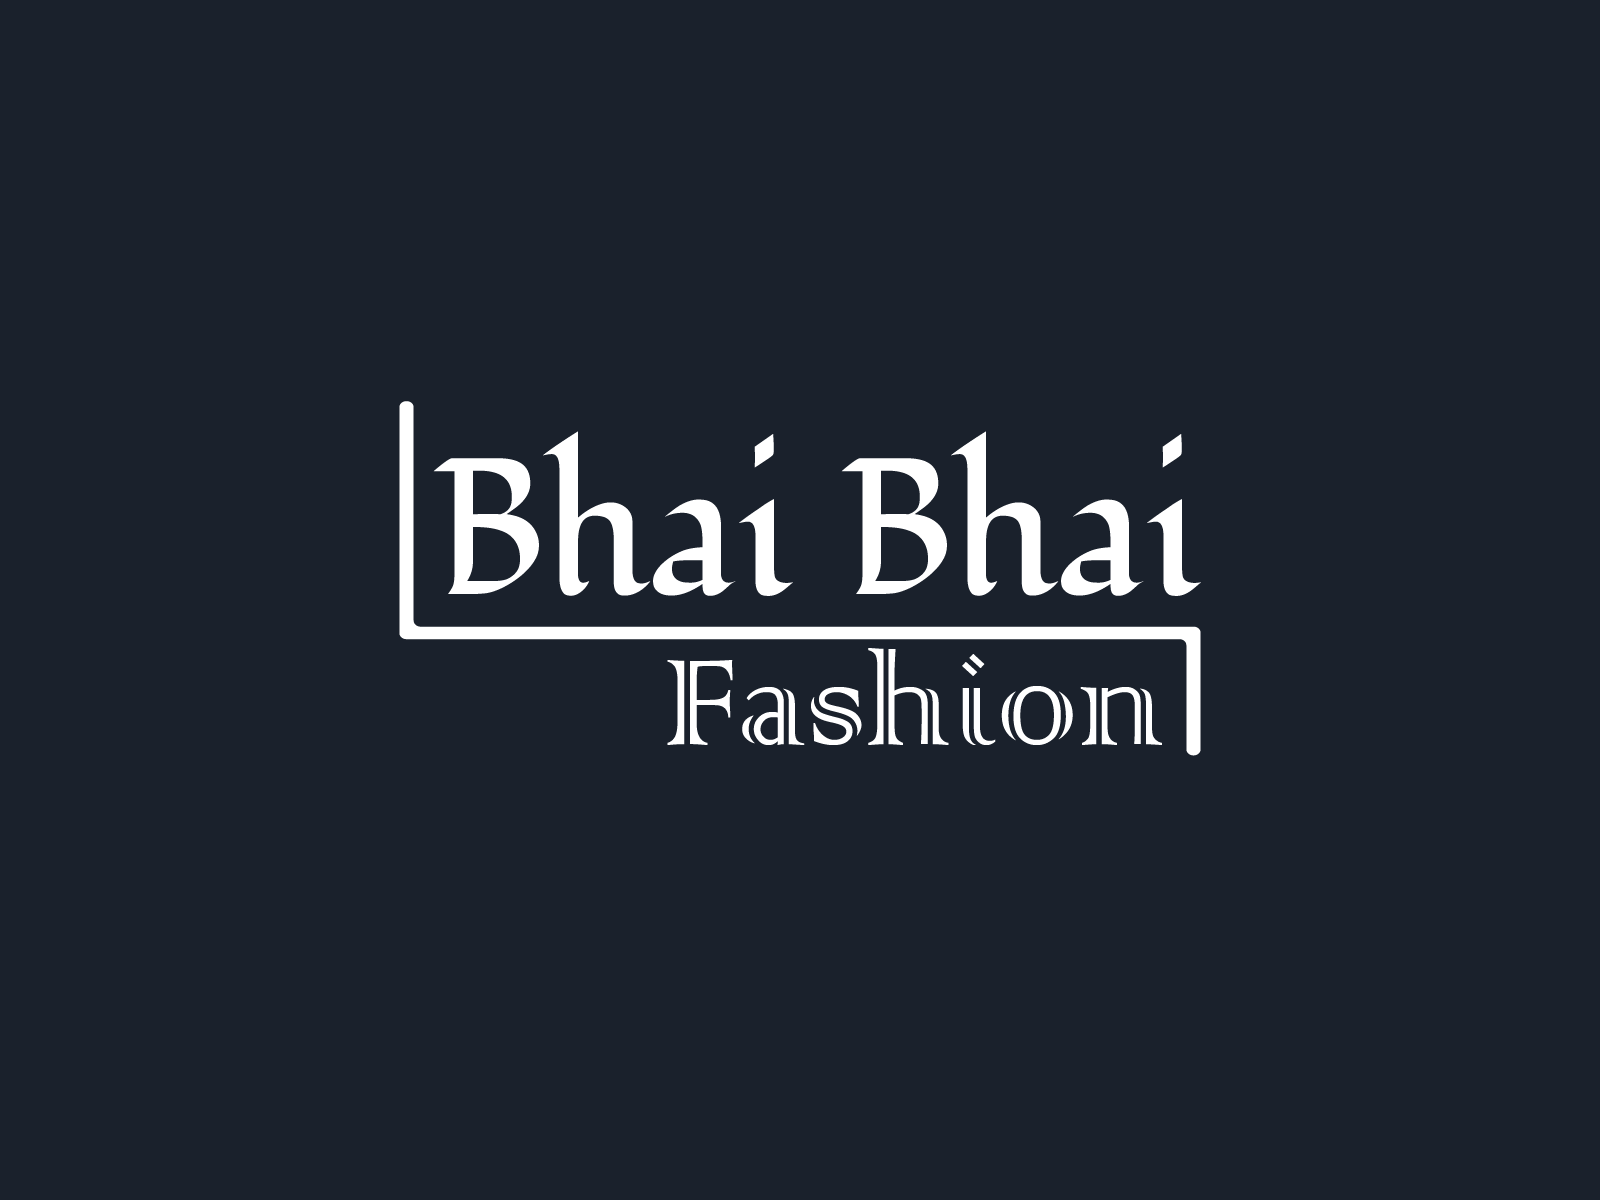 Bhai Bhai Feshion by Taufiqul Islam on Dribbble